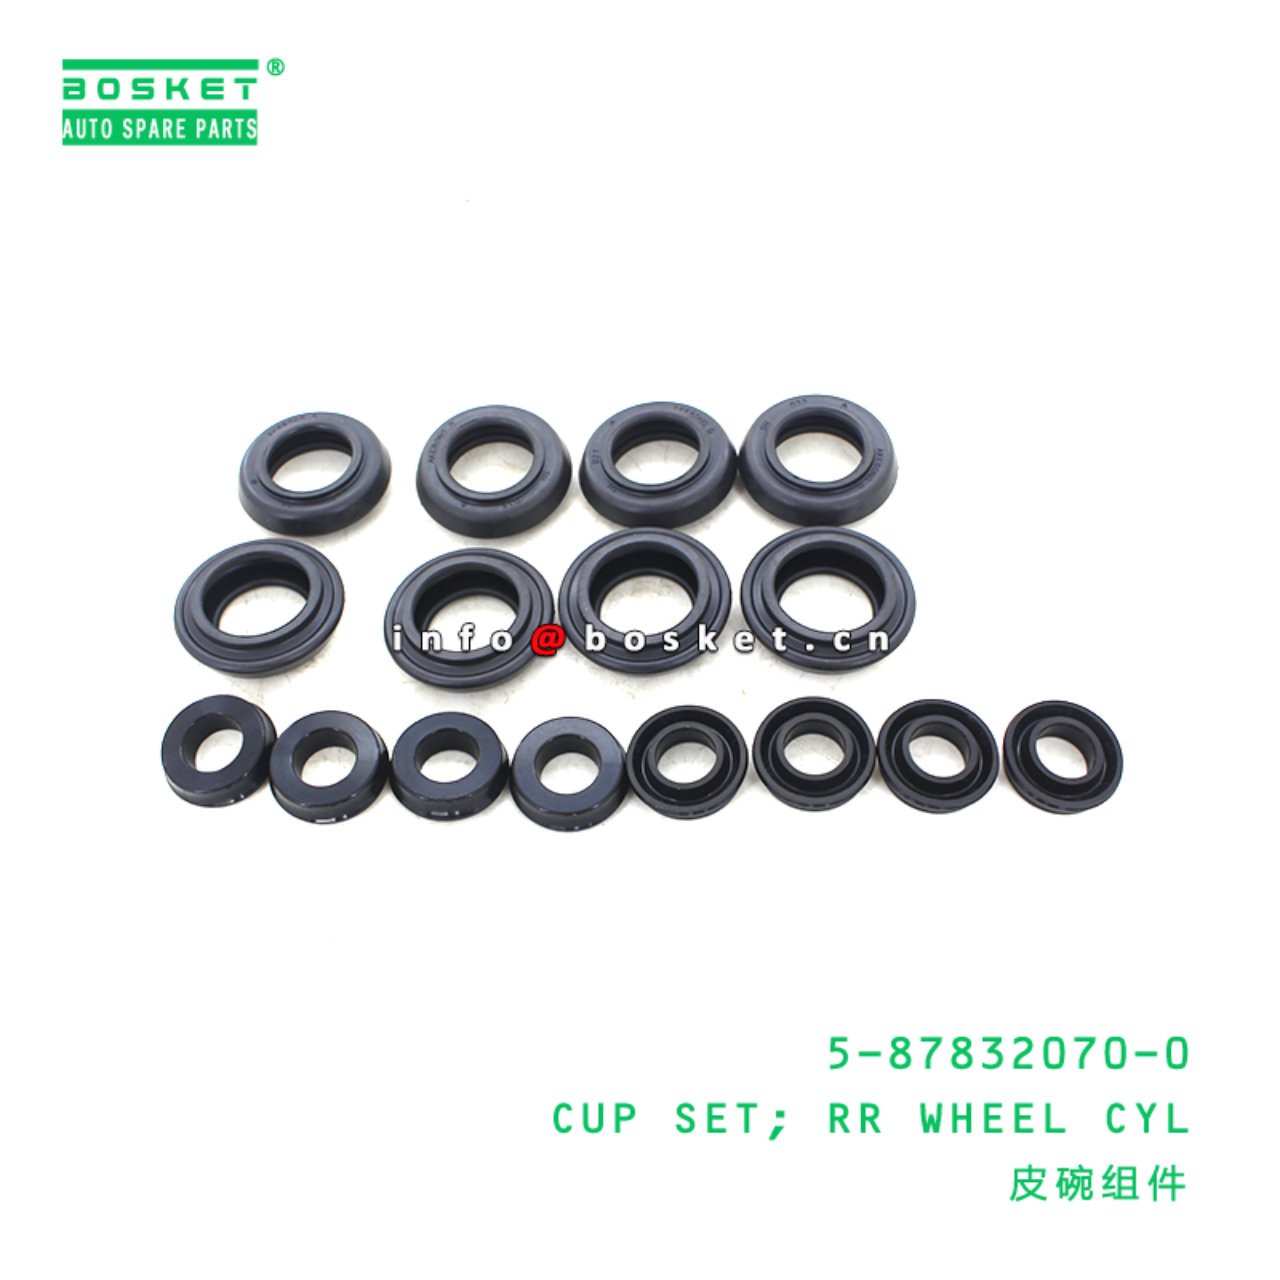 5-87832070-0 Rear Wheel Cylinder Cup Set 5878320700 Suitable for ISUZU NPR